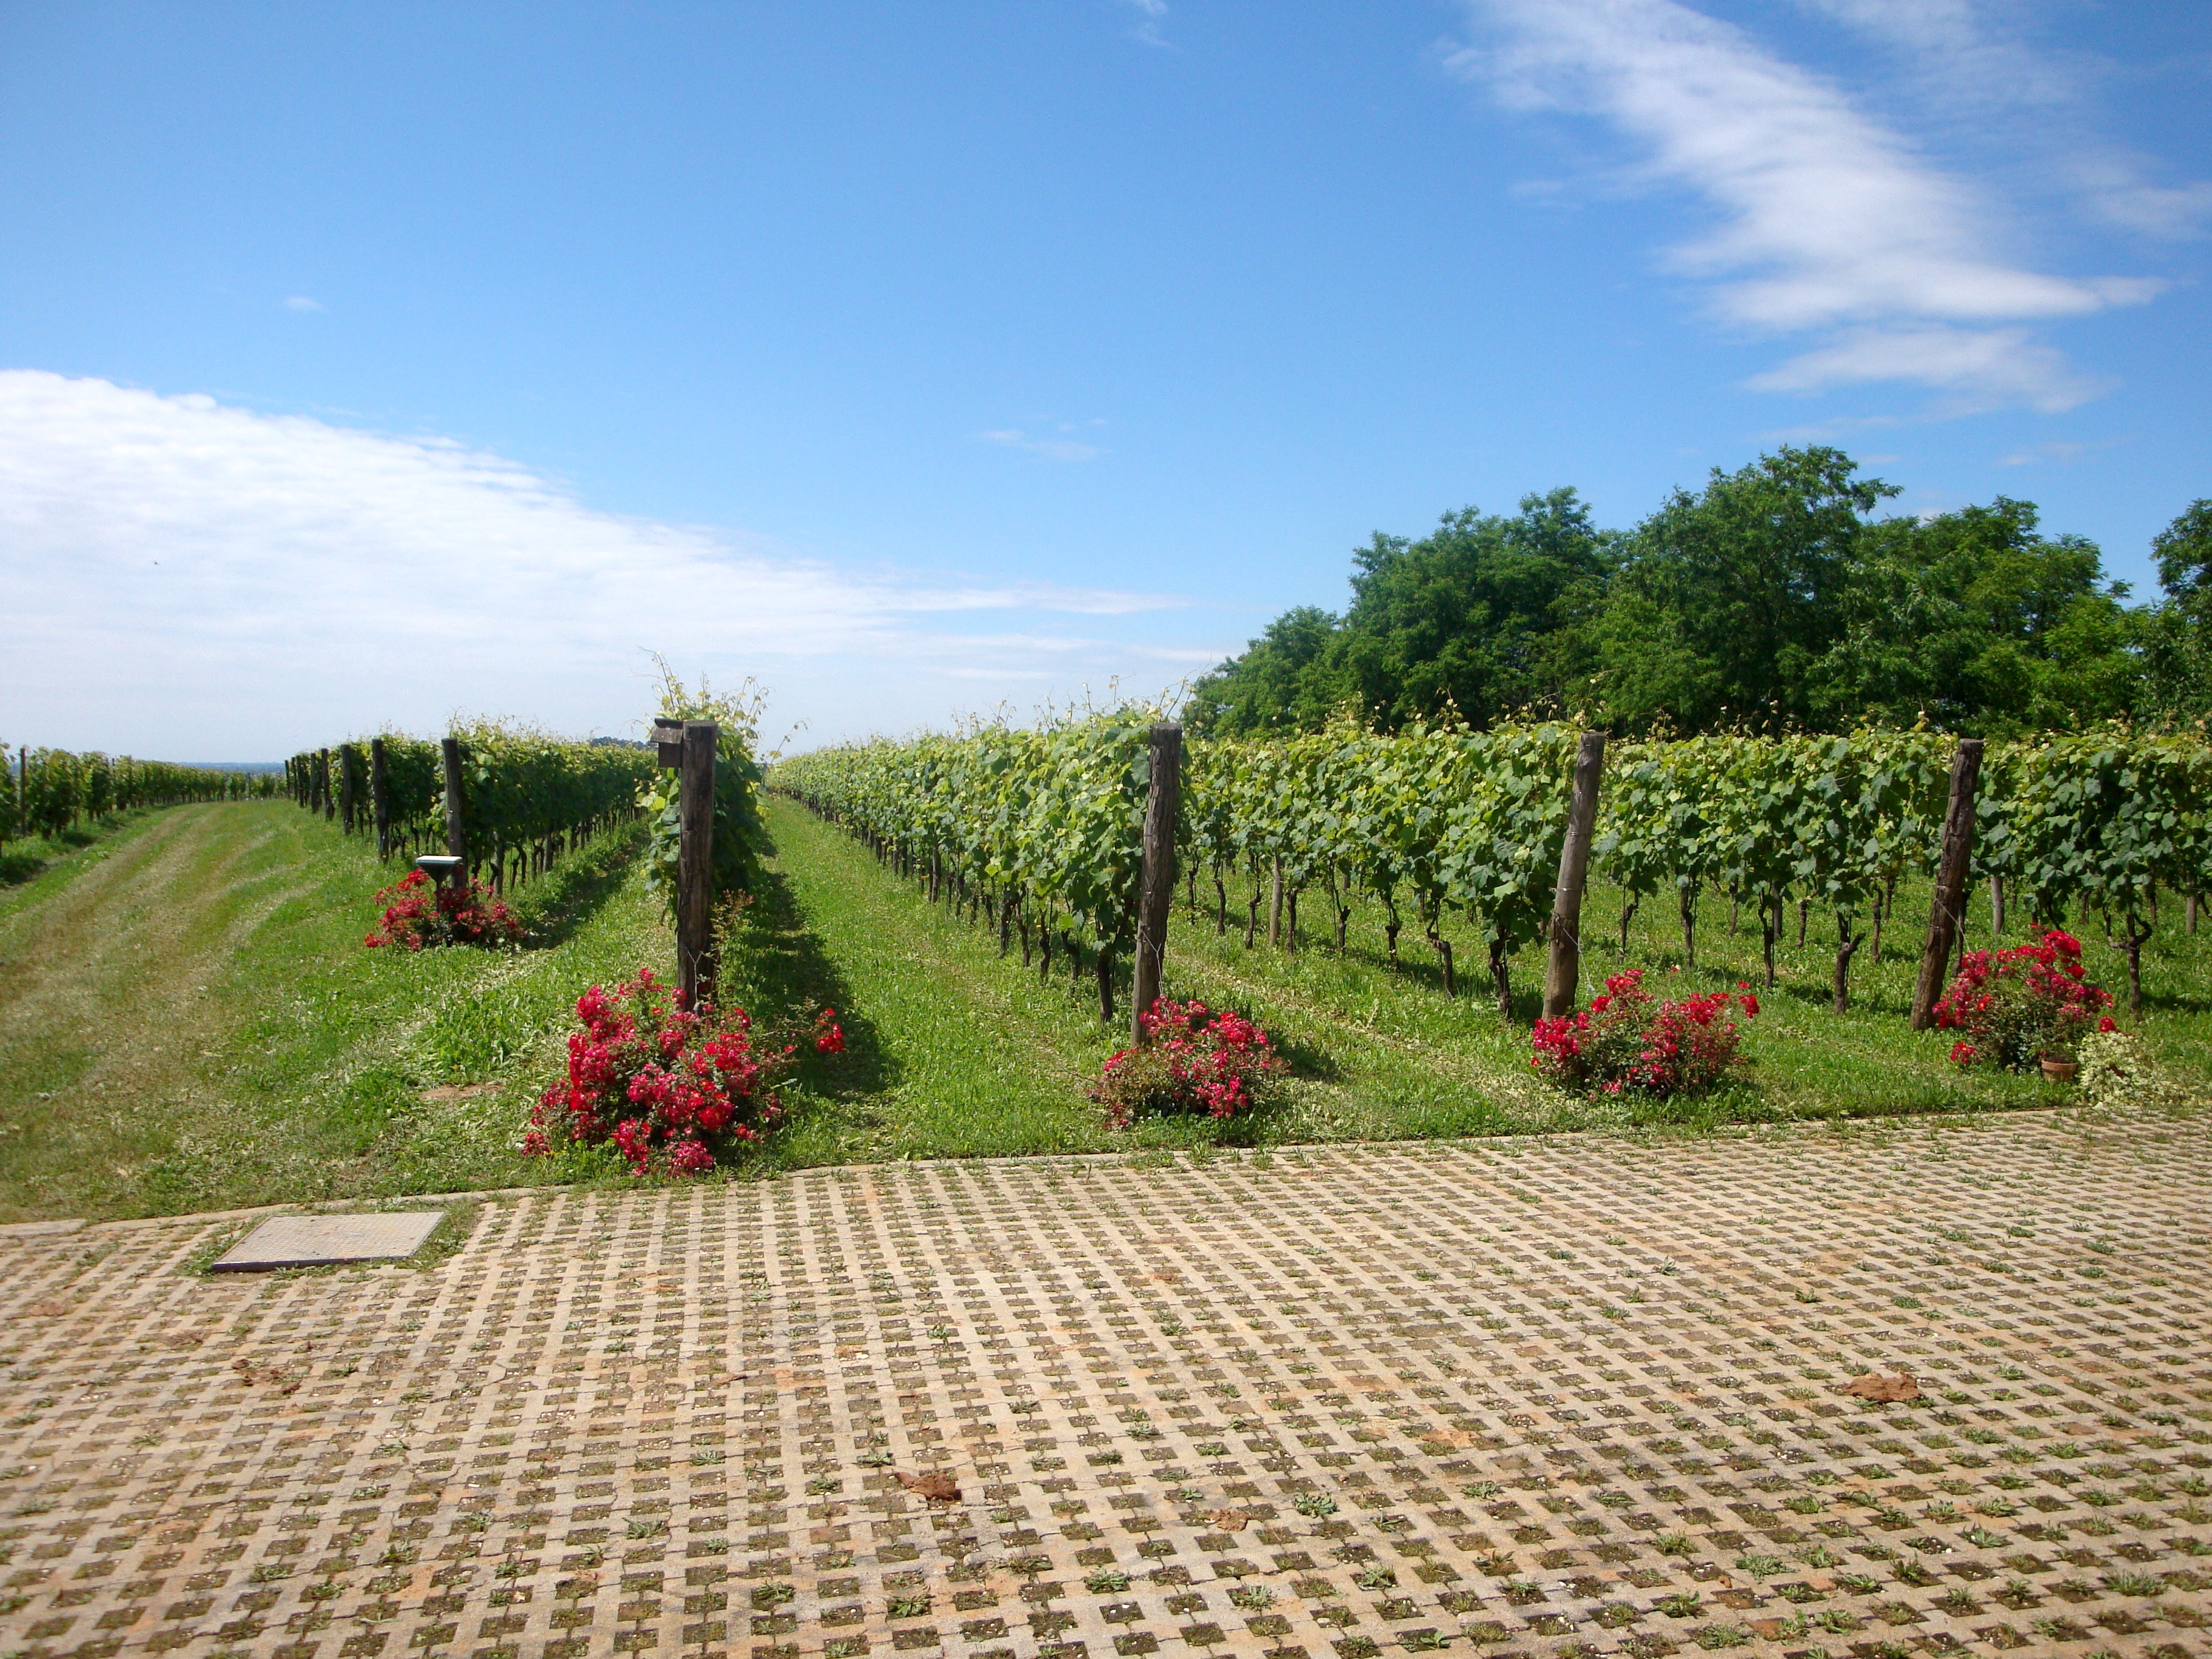 ronco-delle-betulle-vineyards